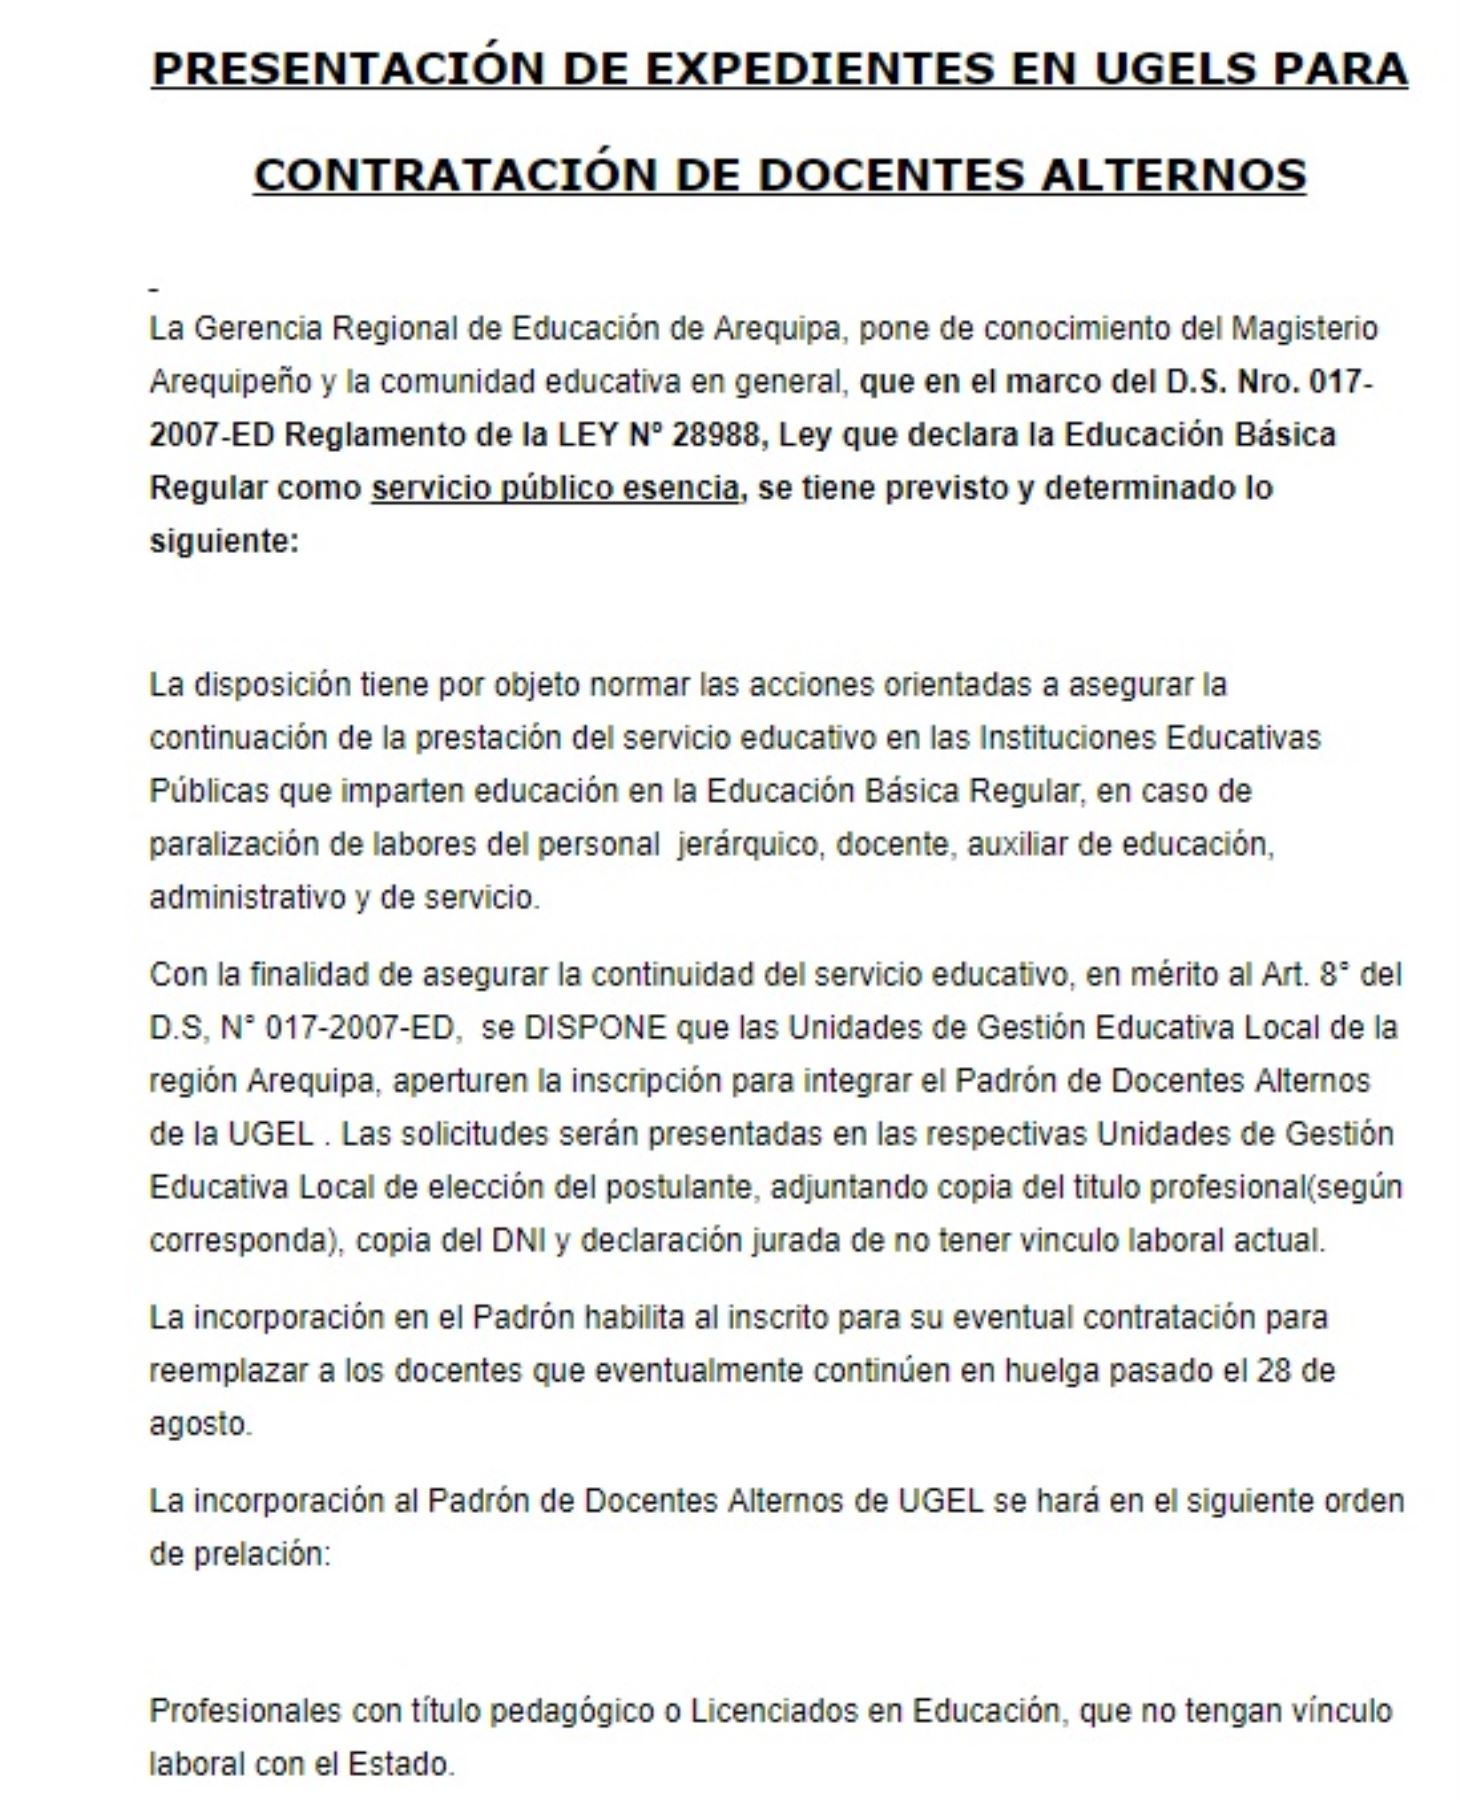 Presentación de expedientes en Ugeles para contratación de docentes alternos.